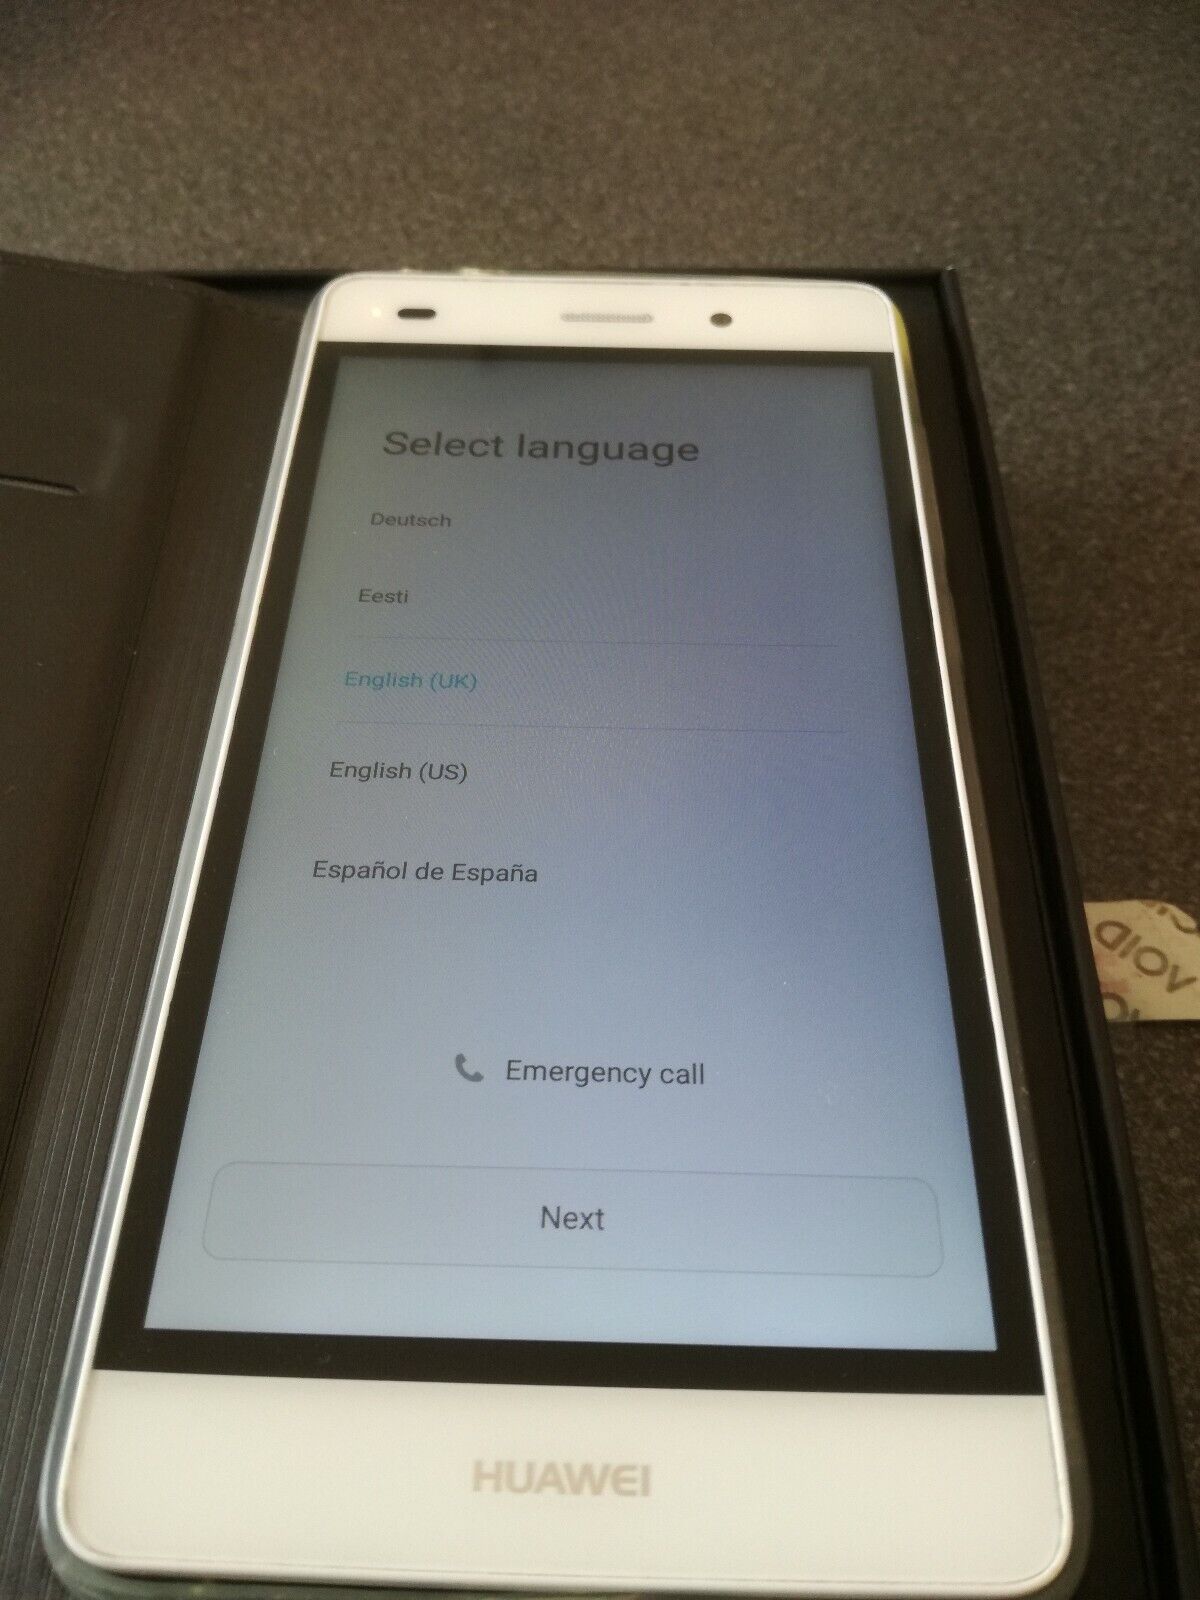 klein nauwelijks Voorzitter New Condition Boxed Huawei P9 Lite 16GB White Unlocked Smartphone  5025744345823 | eBay